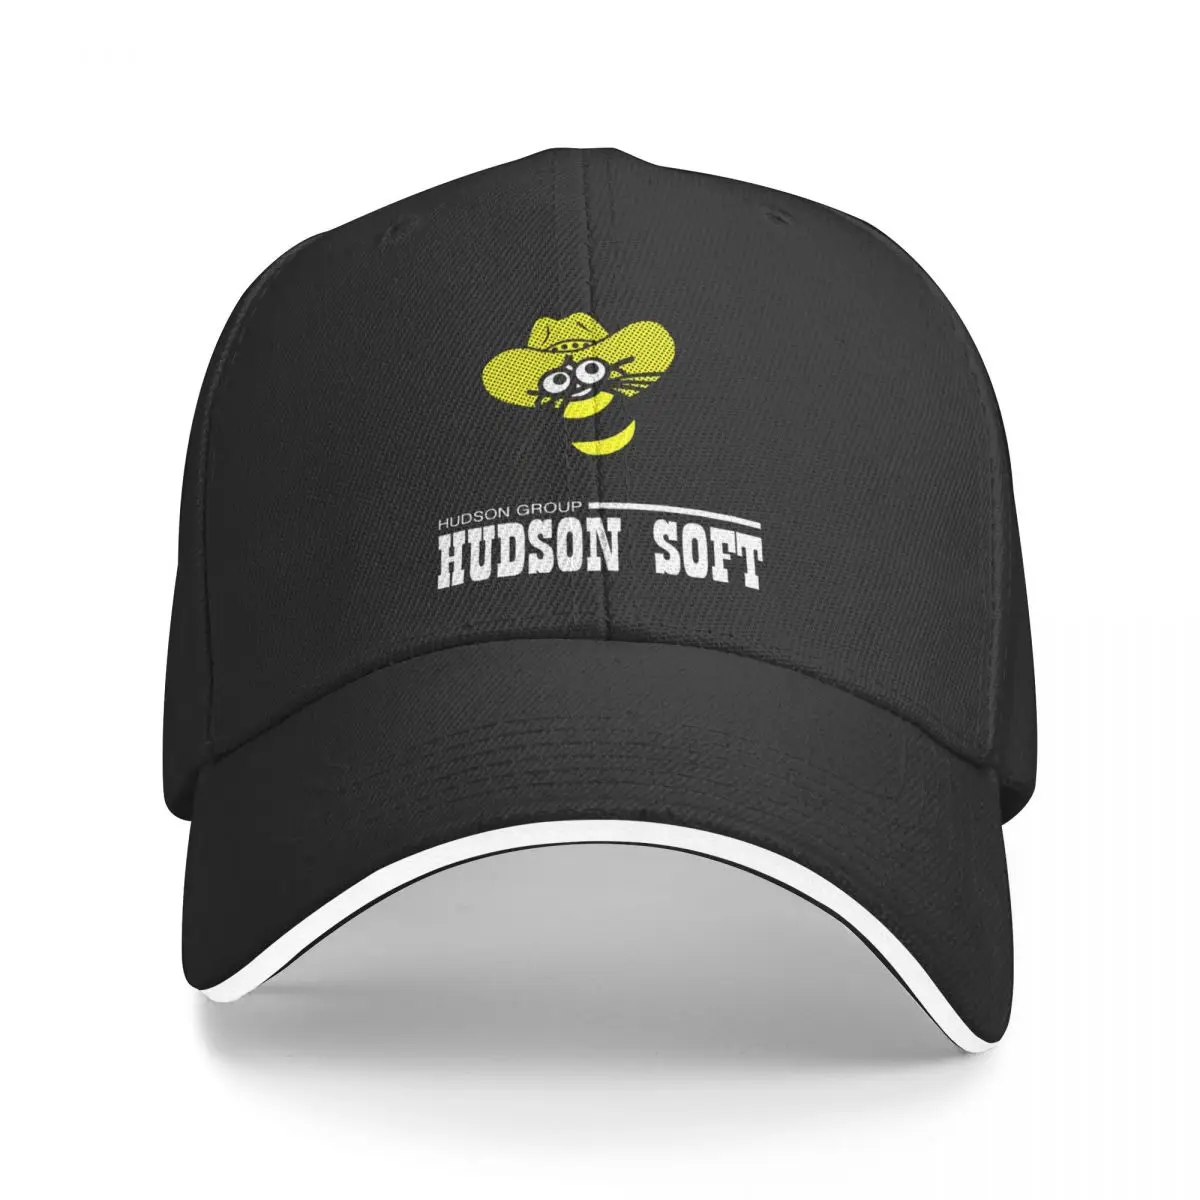 

New Hudson Soft (ハドソン) Cowboy Bee Logo Baseball Cap Golf Hat Fishing Caps Hat Beach Cap For Women Men's